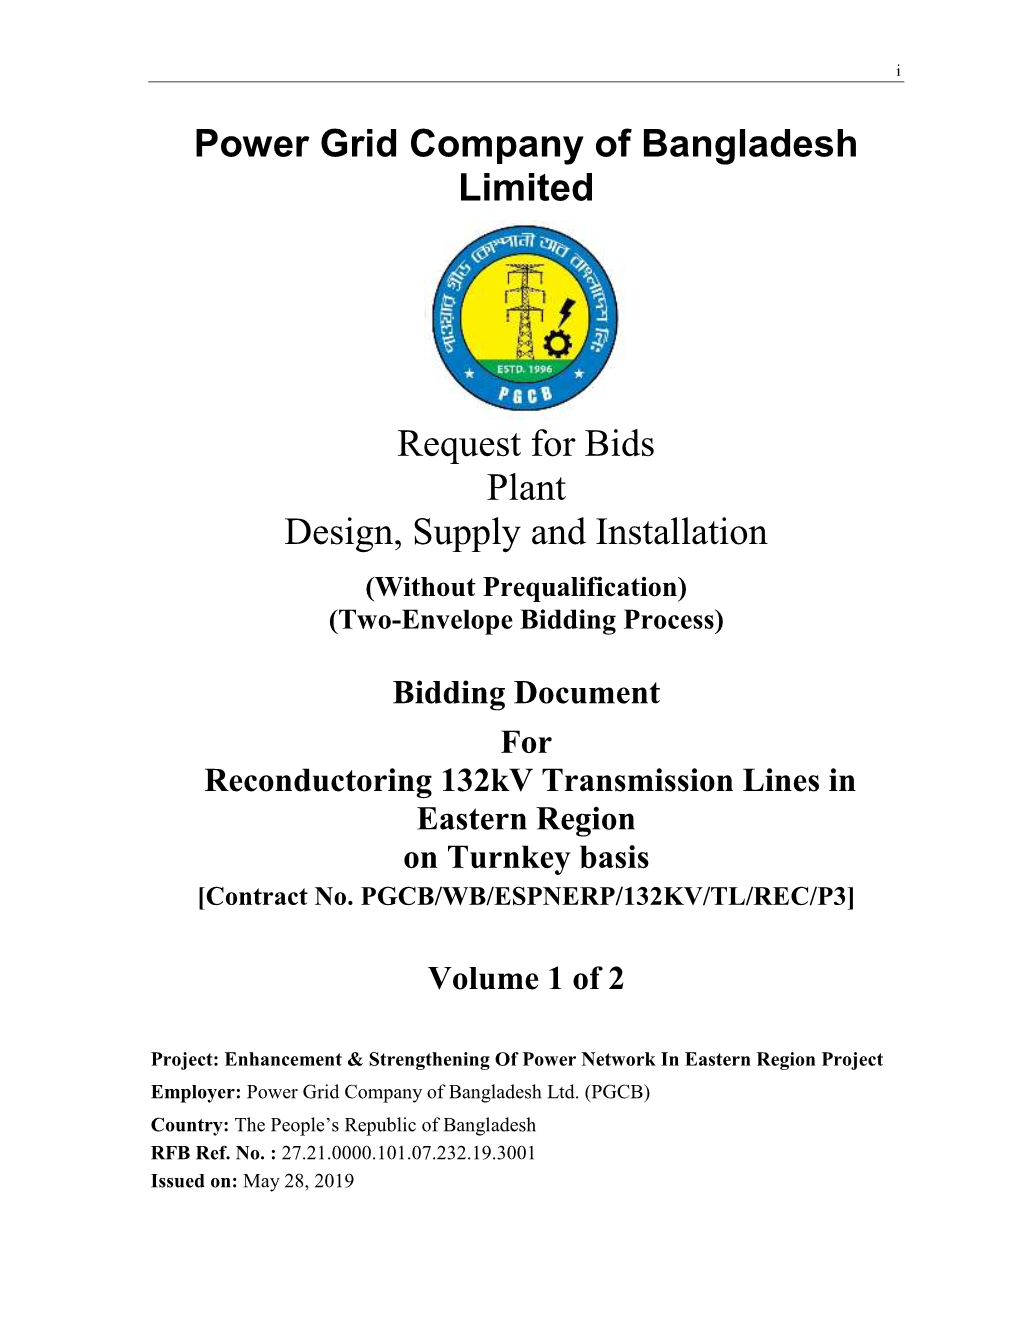 Standard Procurement Document (SPD), Version October 2017, for Procurement of Plant (Design, Supply & Installation)